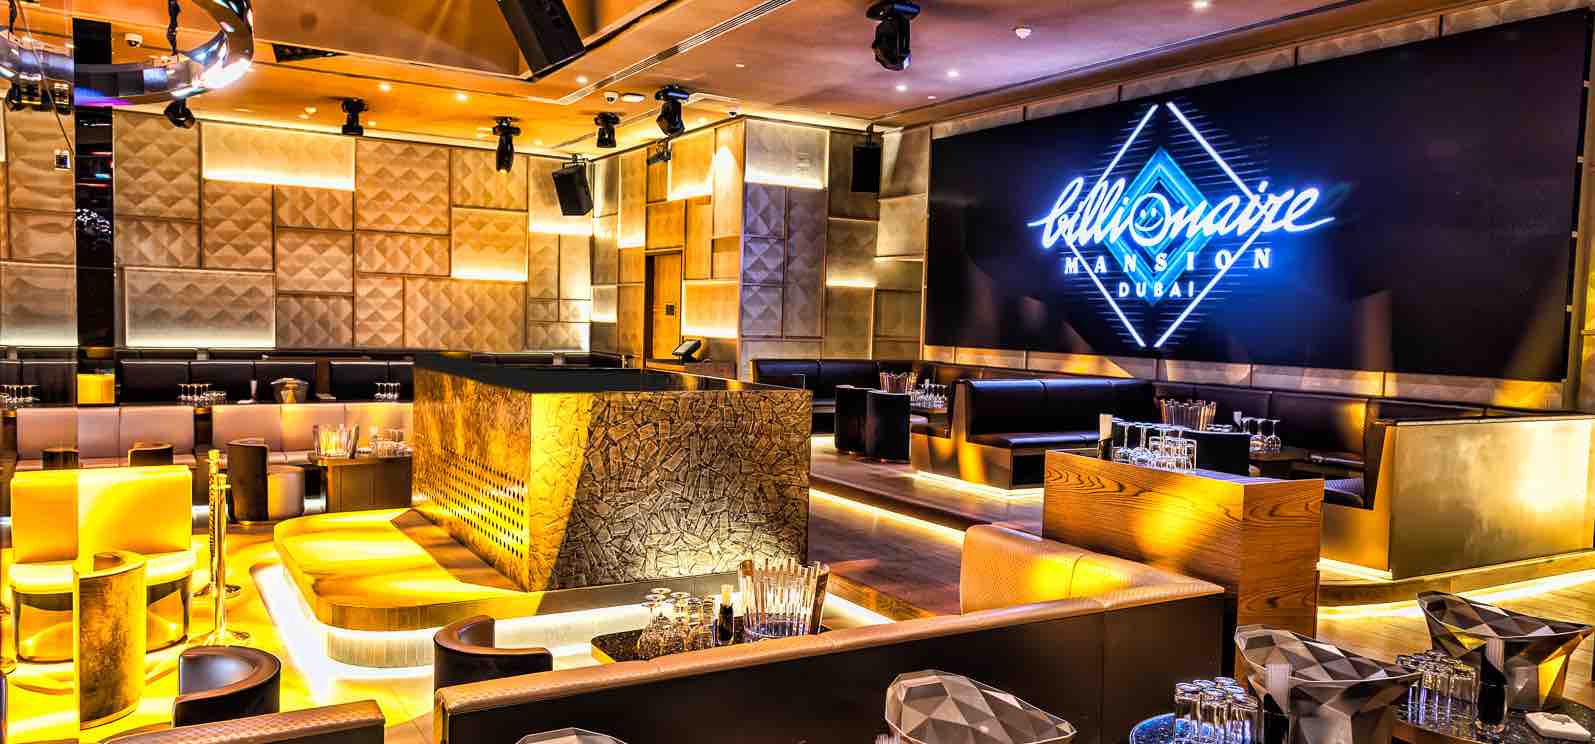 Billionaire Dubai - Bottle Service and VIP Table Booking